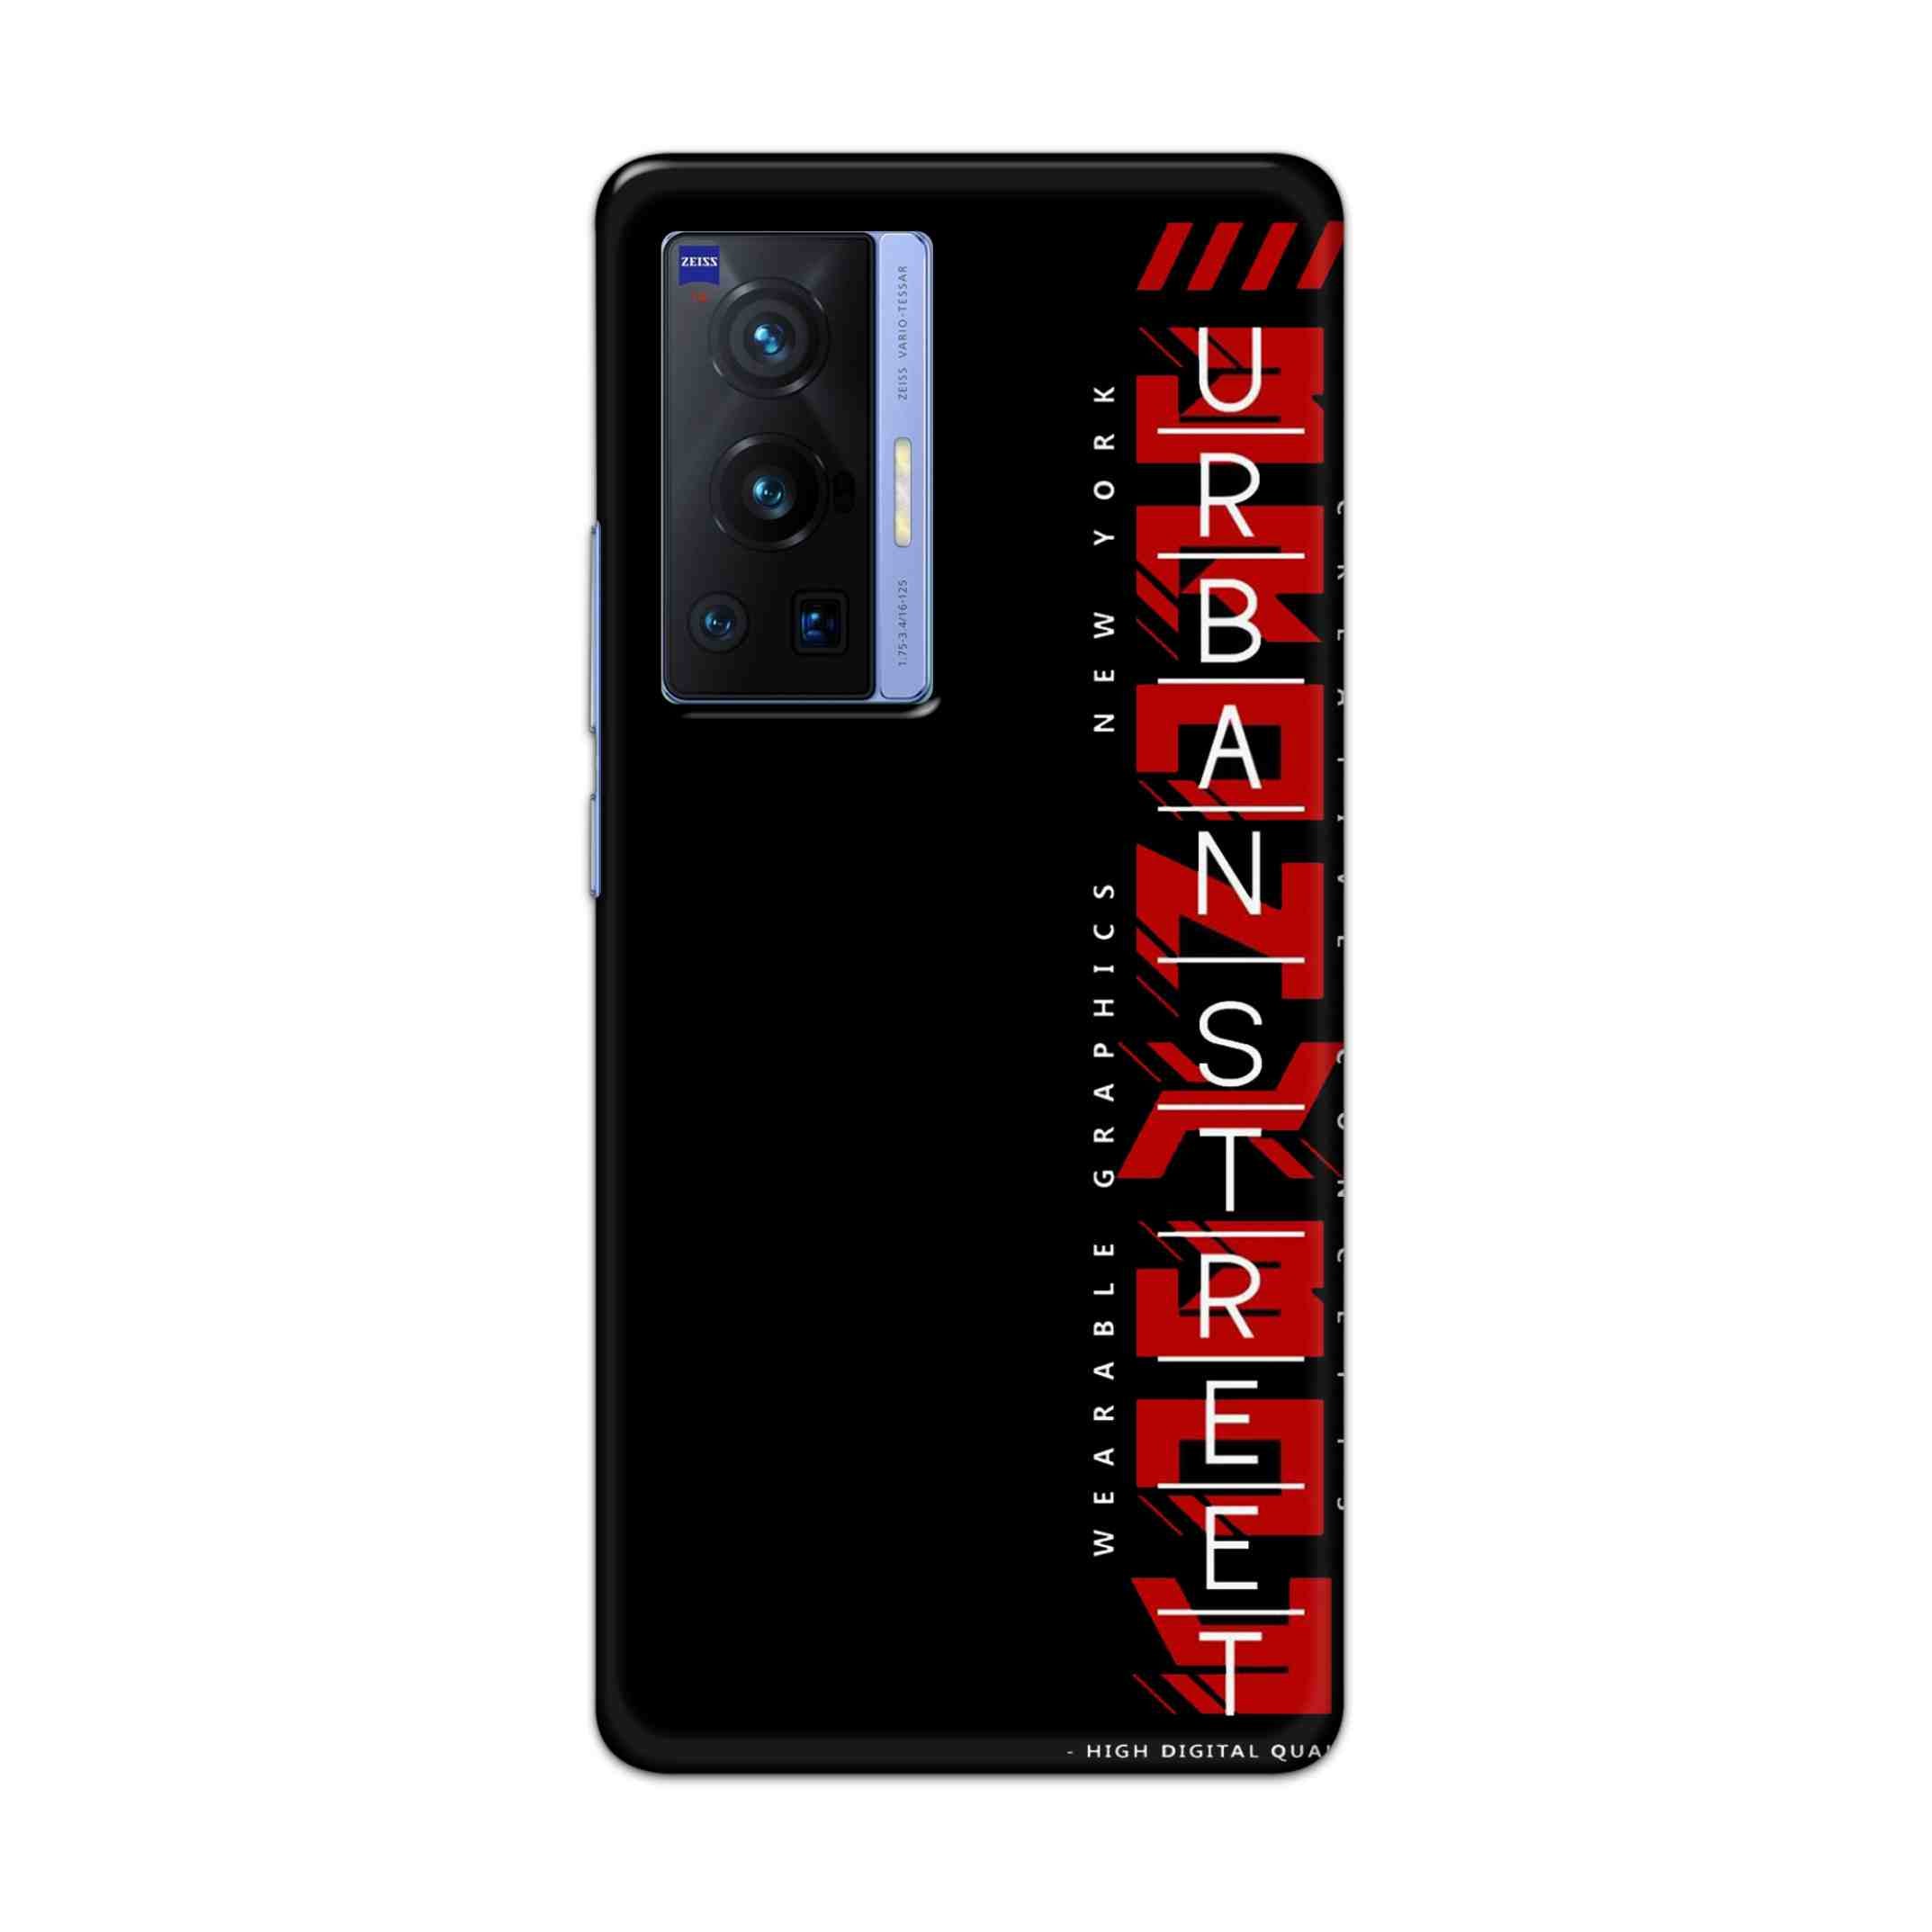 Buy Urban Street Hard Back Mobile Phone Case Cover For Vivo X70 Pro Online